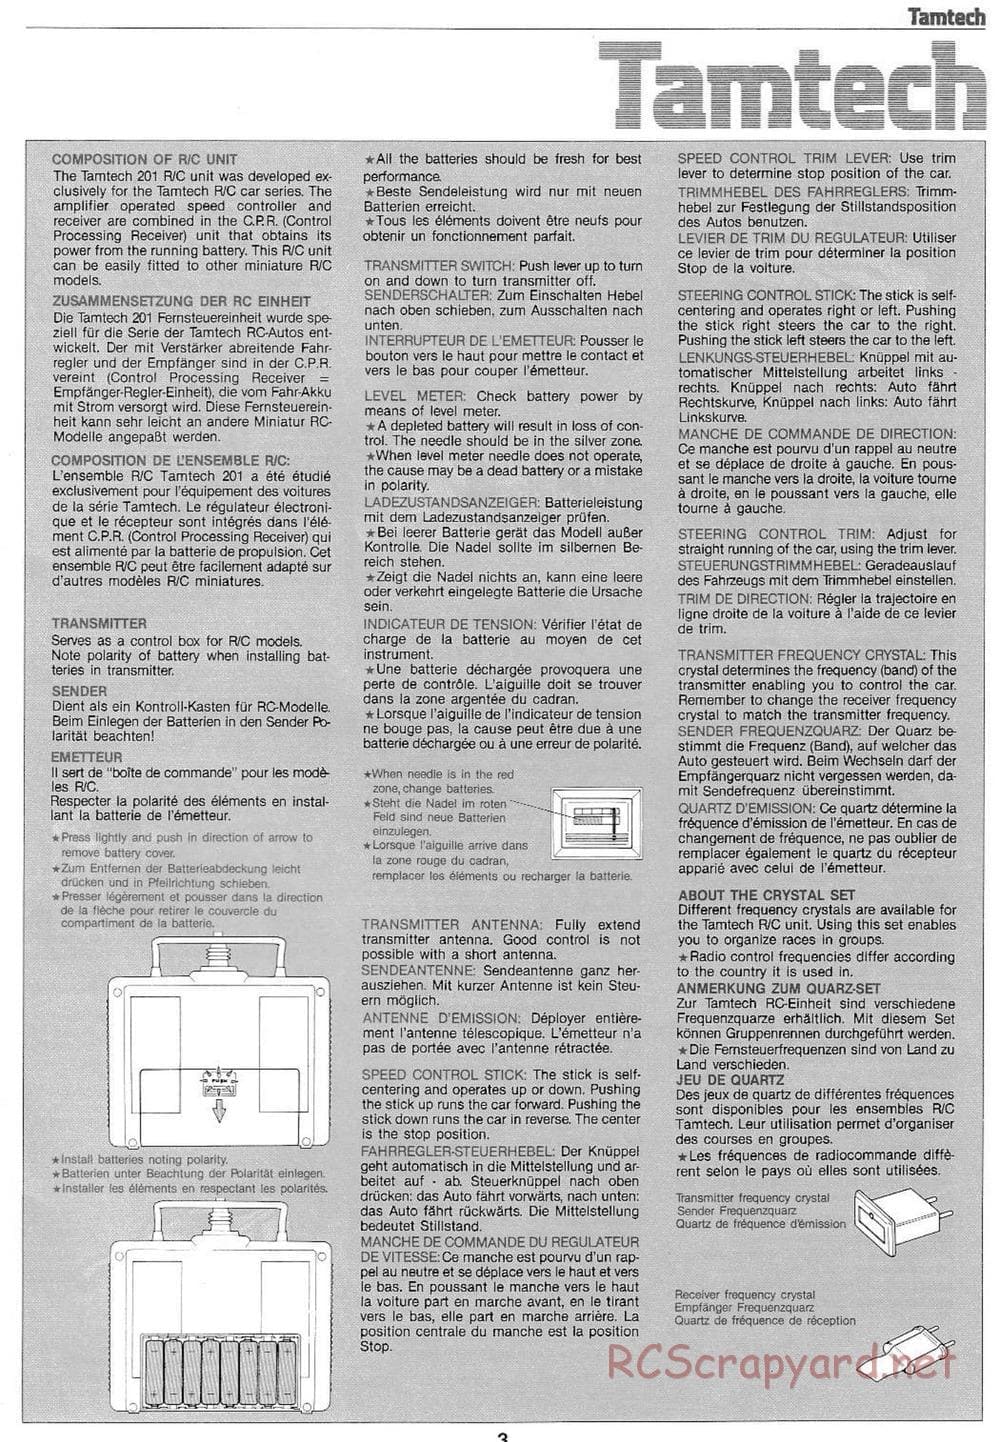 Tamiya - TamTech - On-Road Chassis - Manual - Page 3